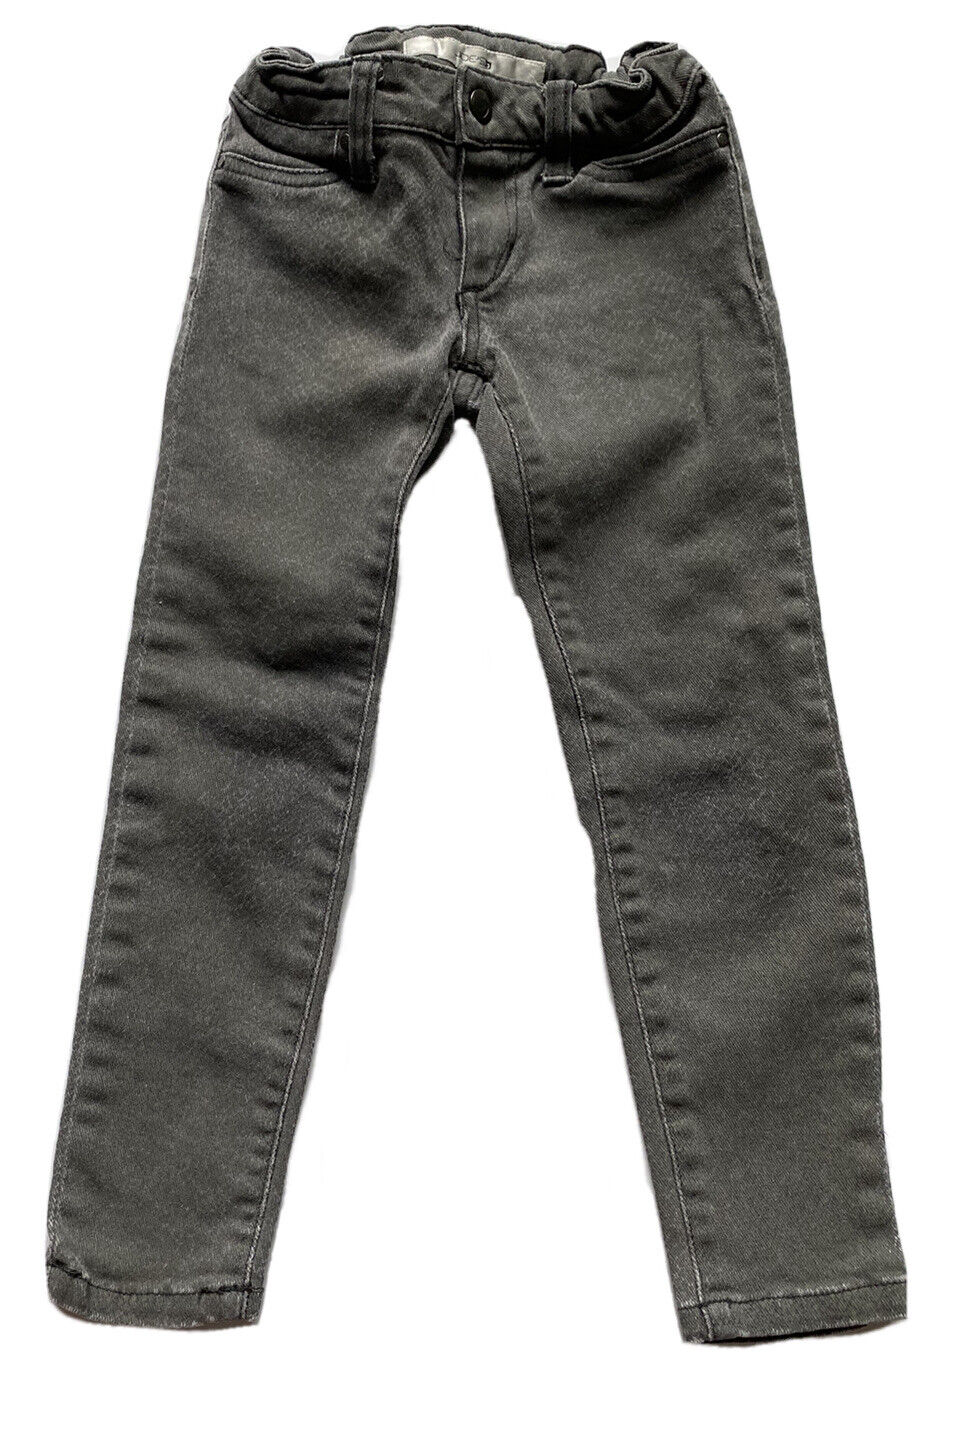 Joe's Jeans Girl's Pants Jeans Gray Jean Pants - Size 5 5T Orig.$45